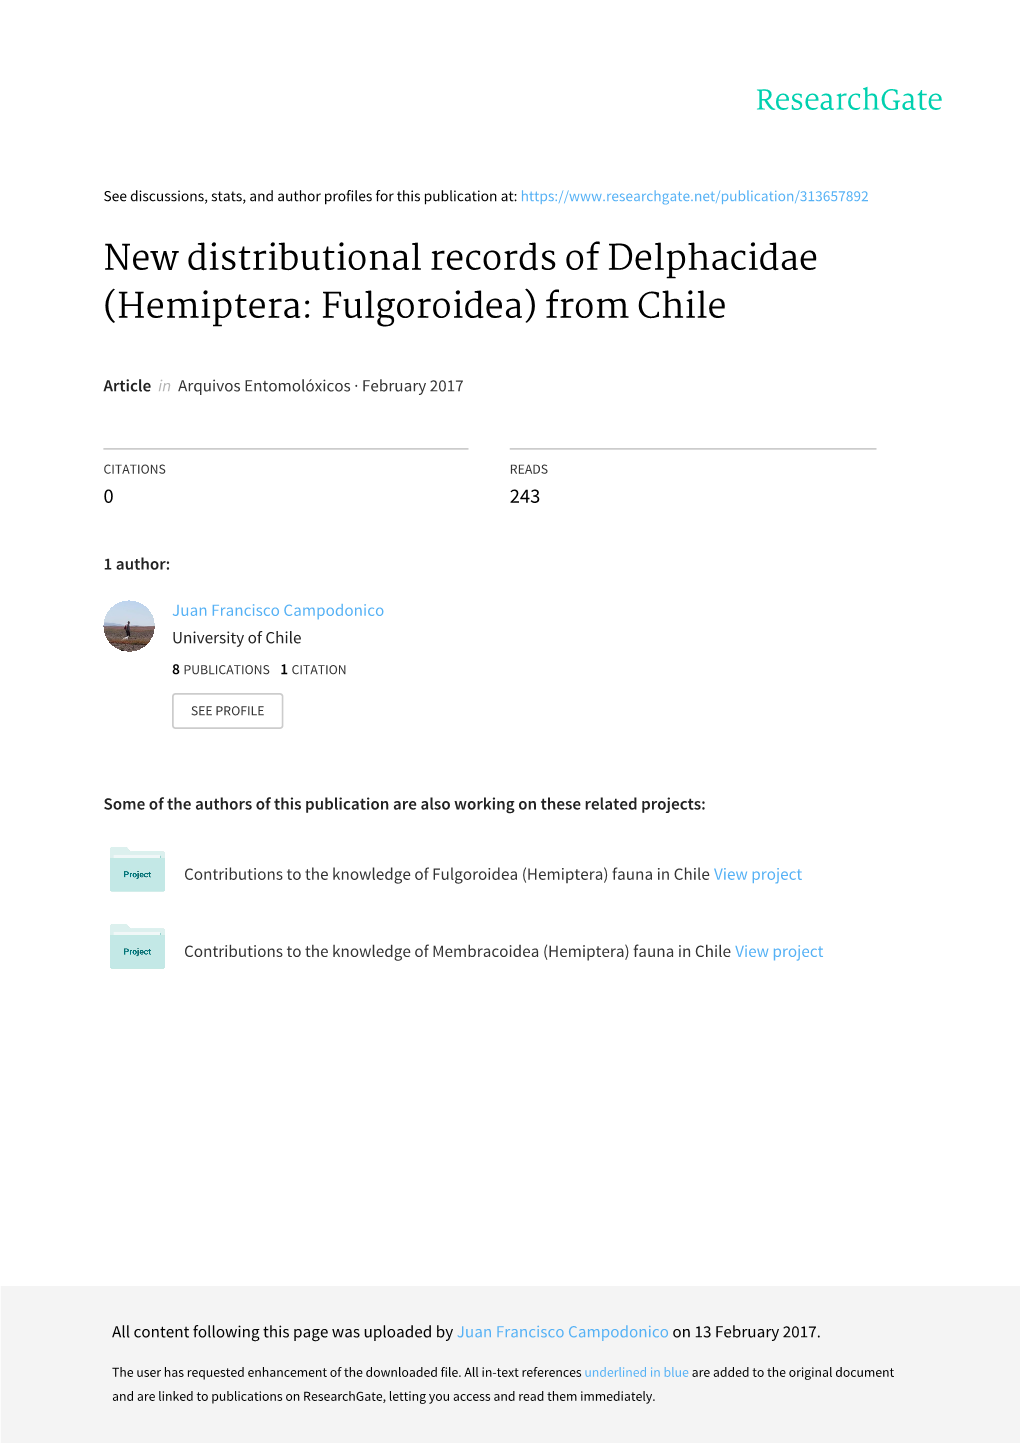 New Distributional Records of Delphacidae (Hemiptera: Fulgoroidea) from Chile